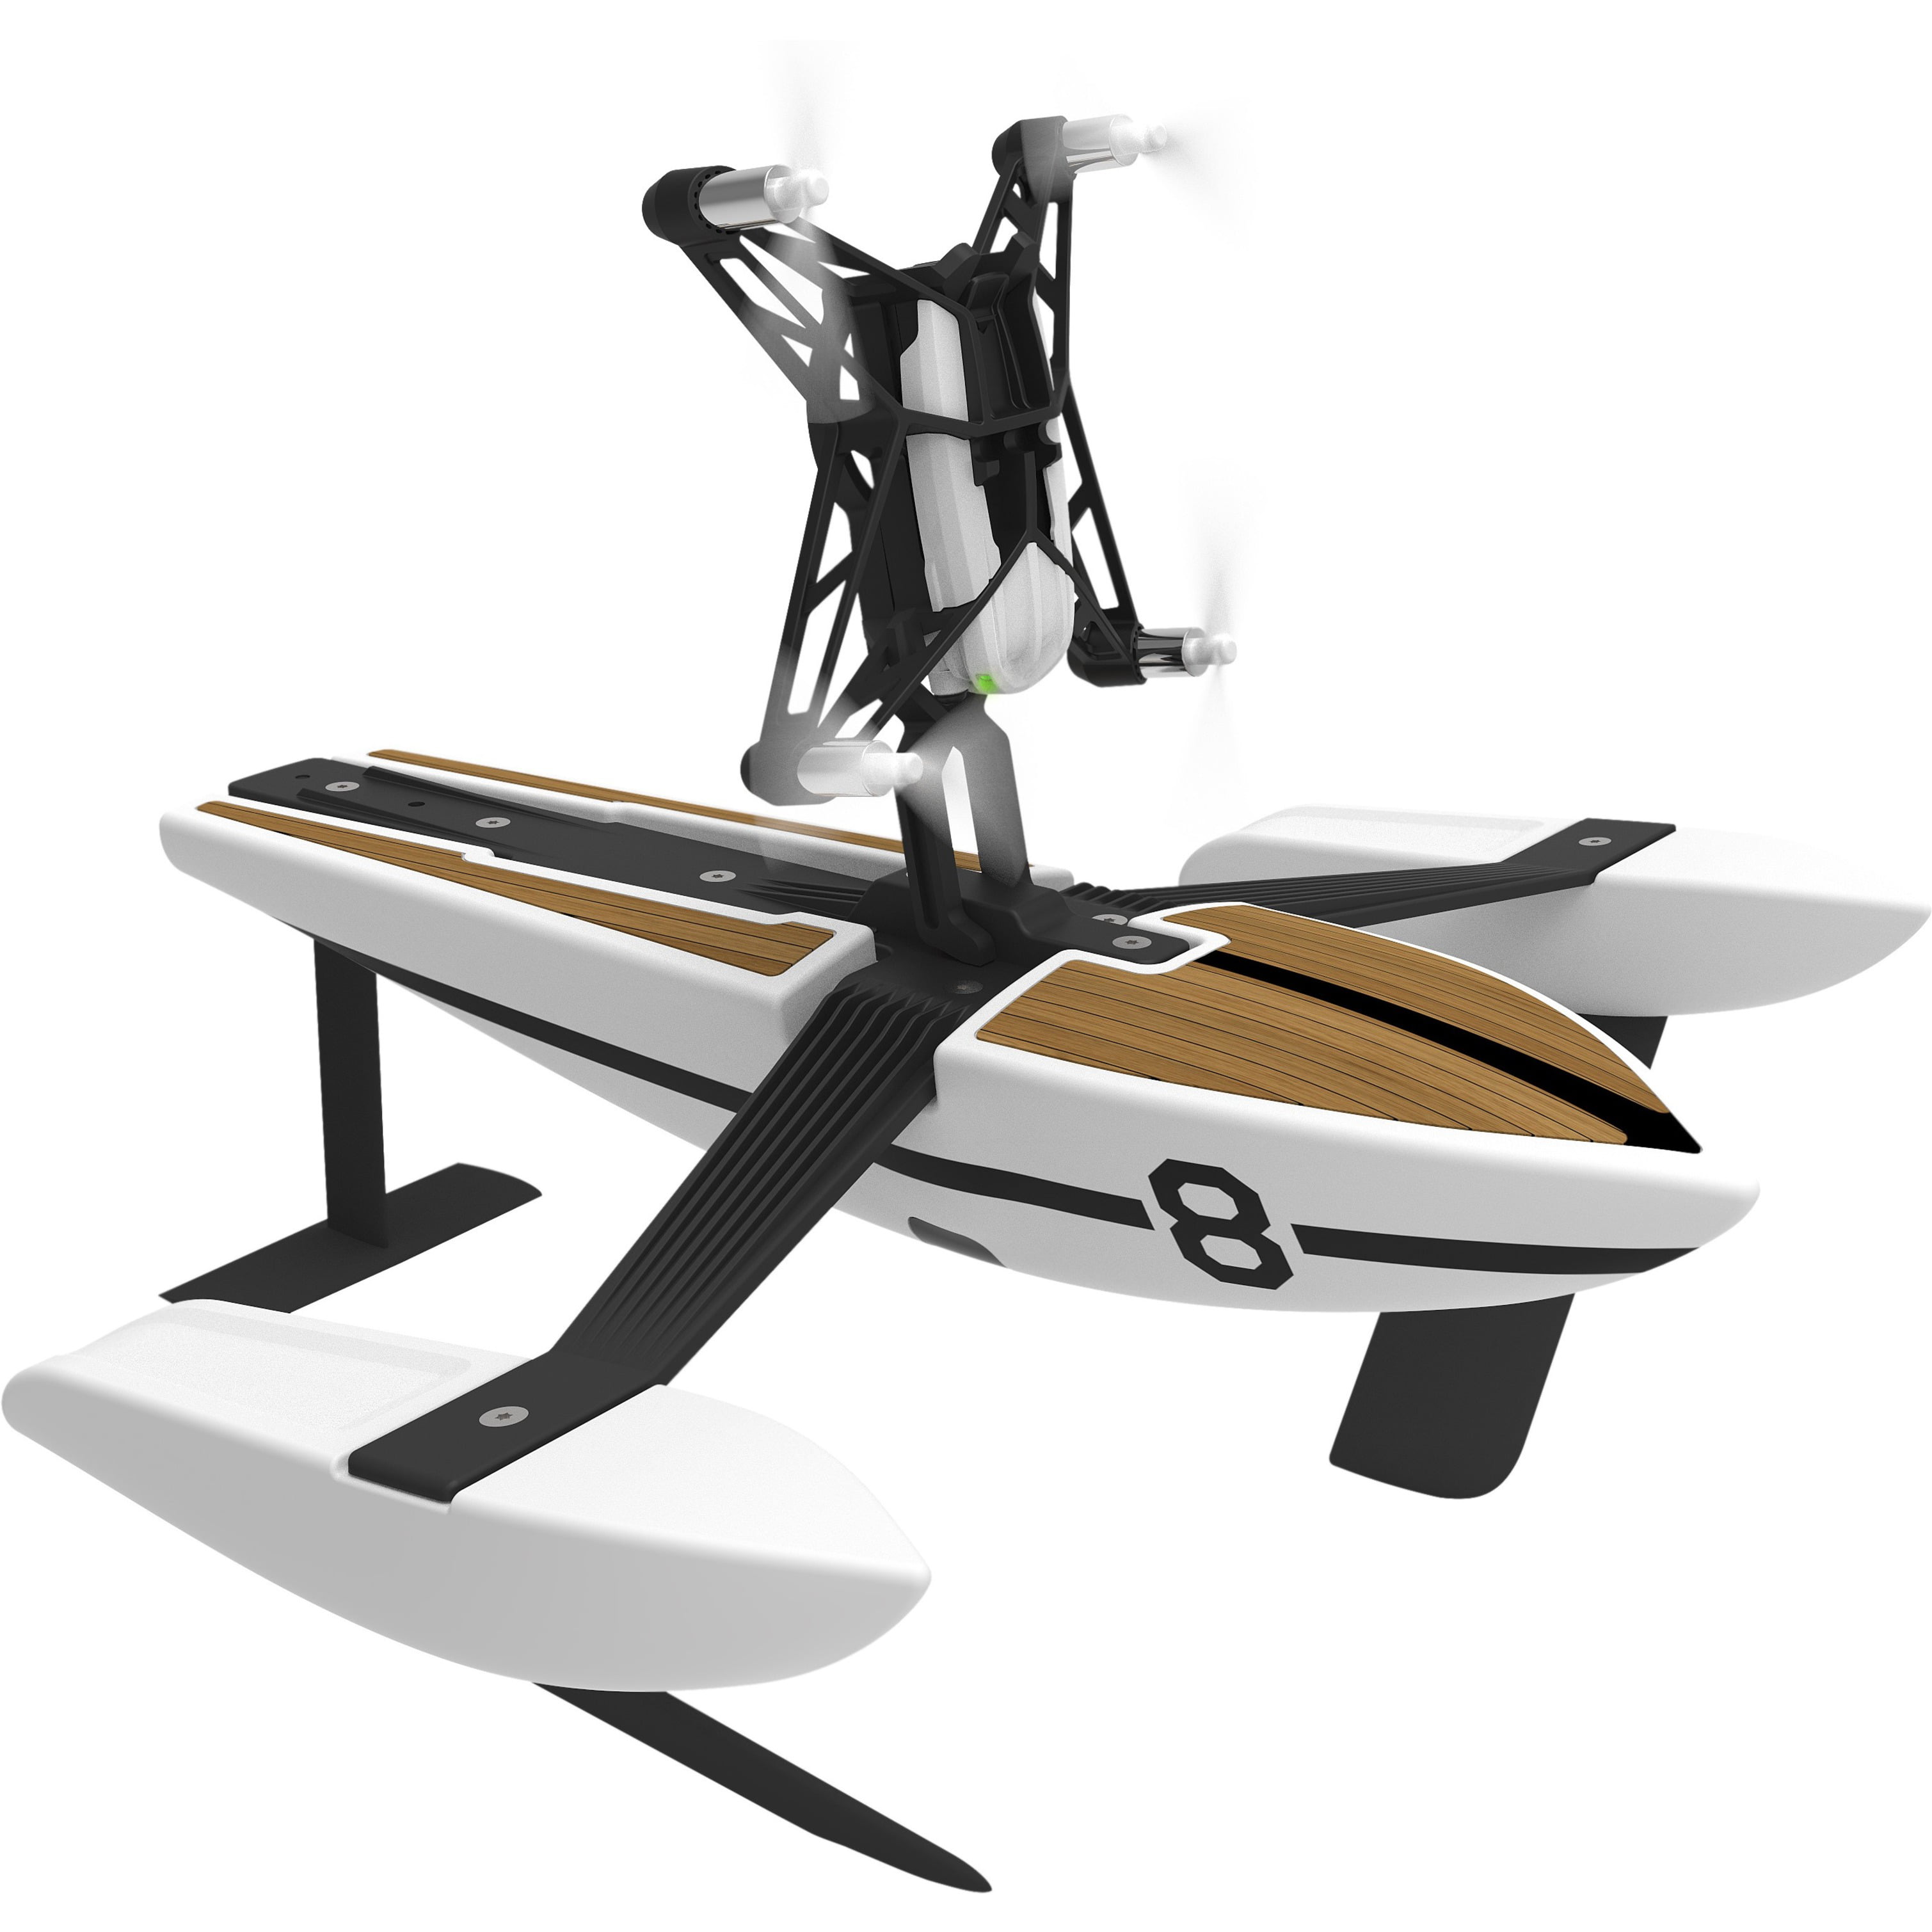 Parrot NewZ Hydrofoil Drone - Walmart.com